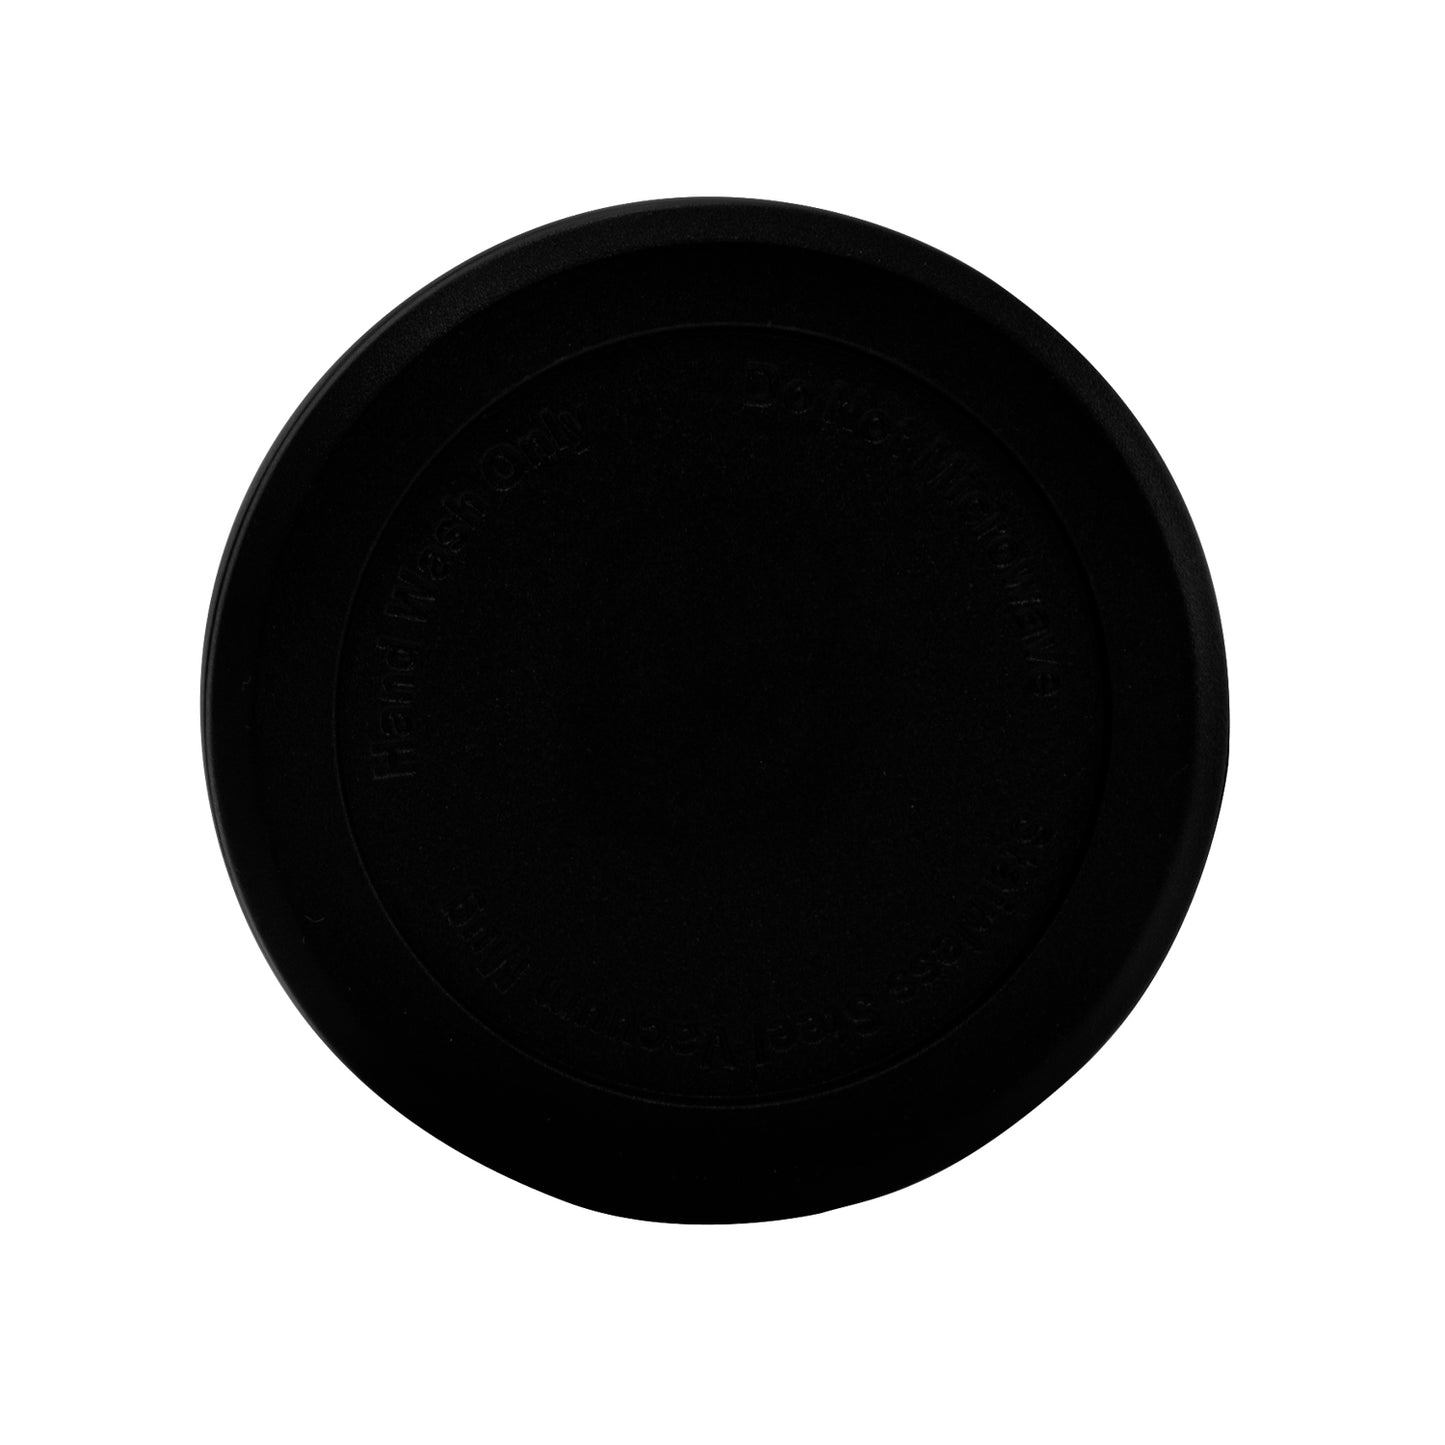 Termo inteligente metálico Pantalla LED color negro